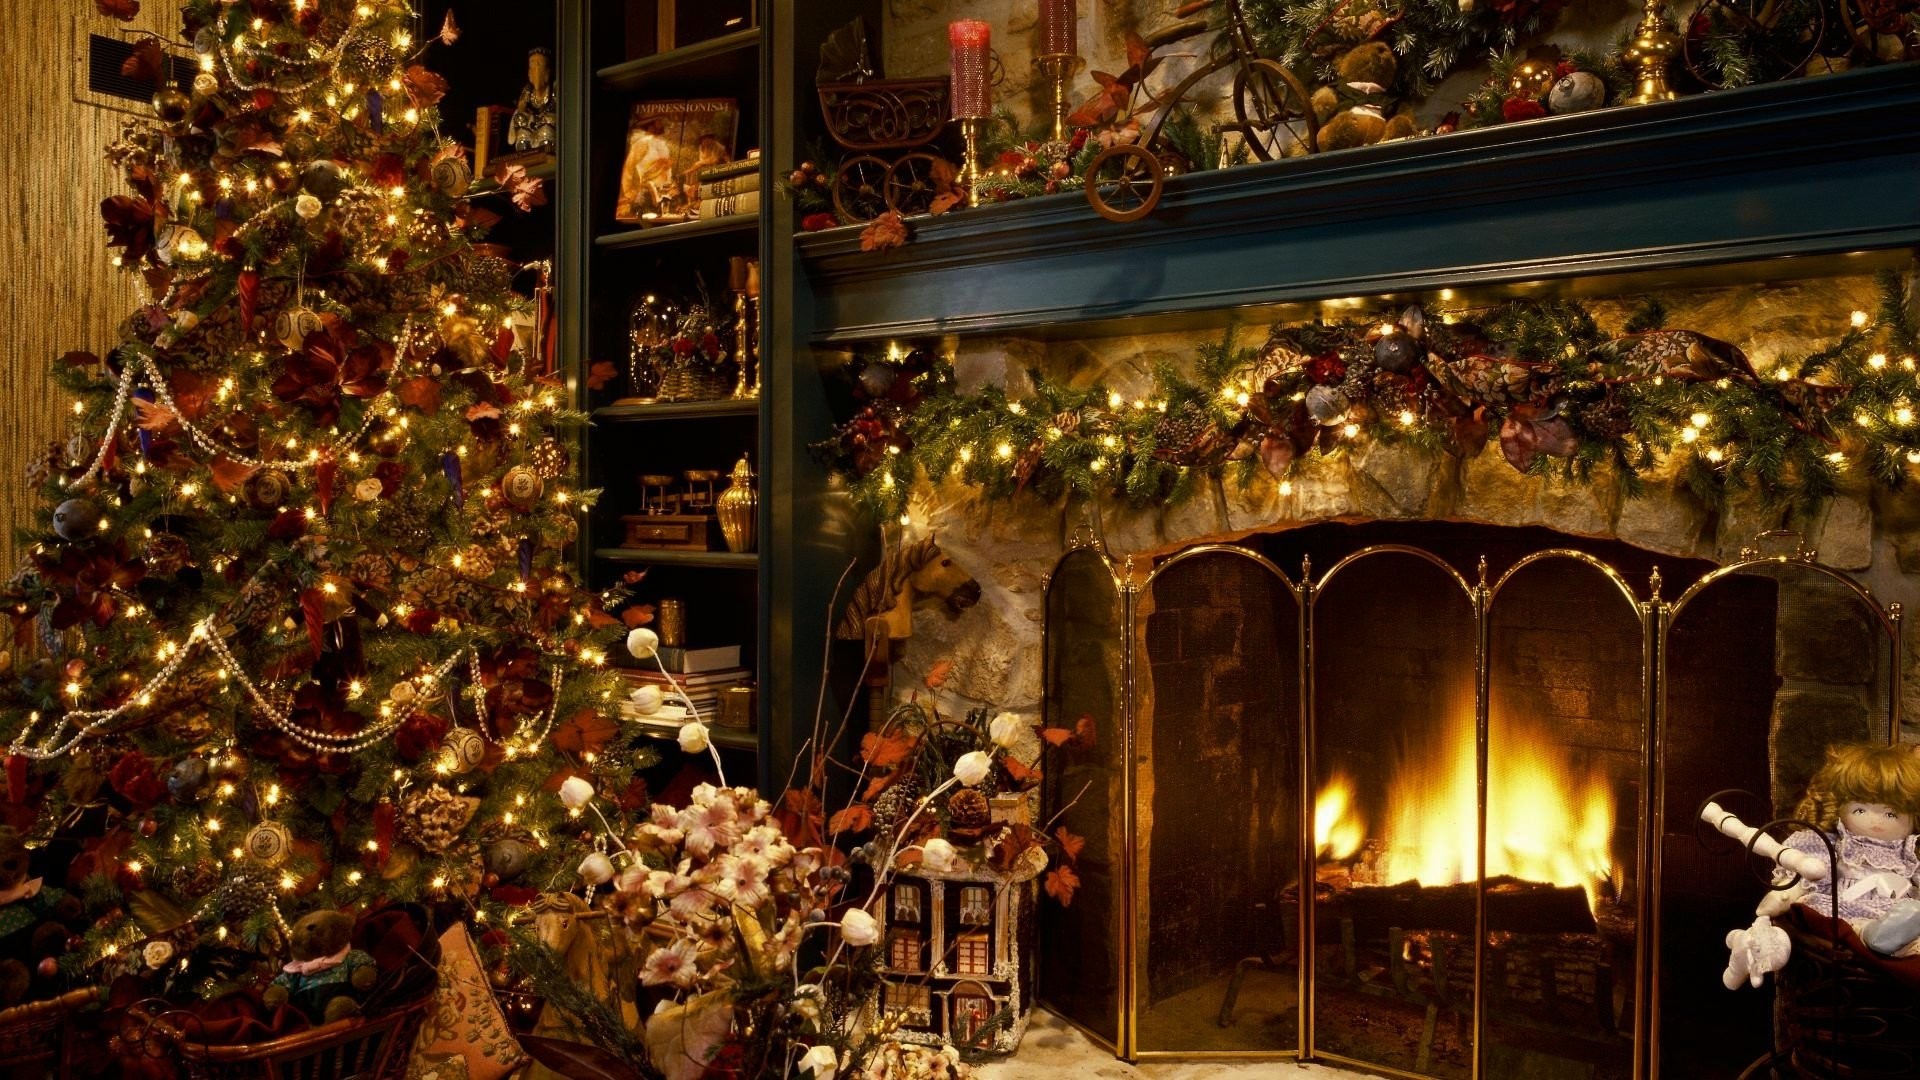 1920x1080 Christmas Tree Next To The Fireplace